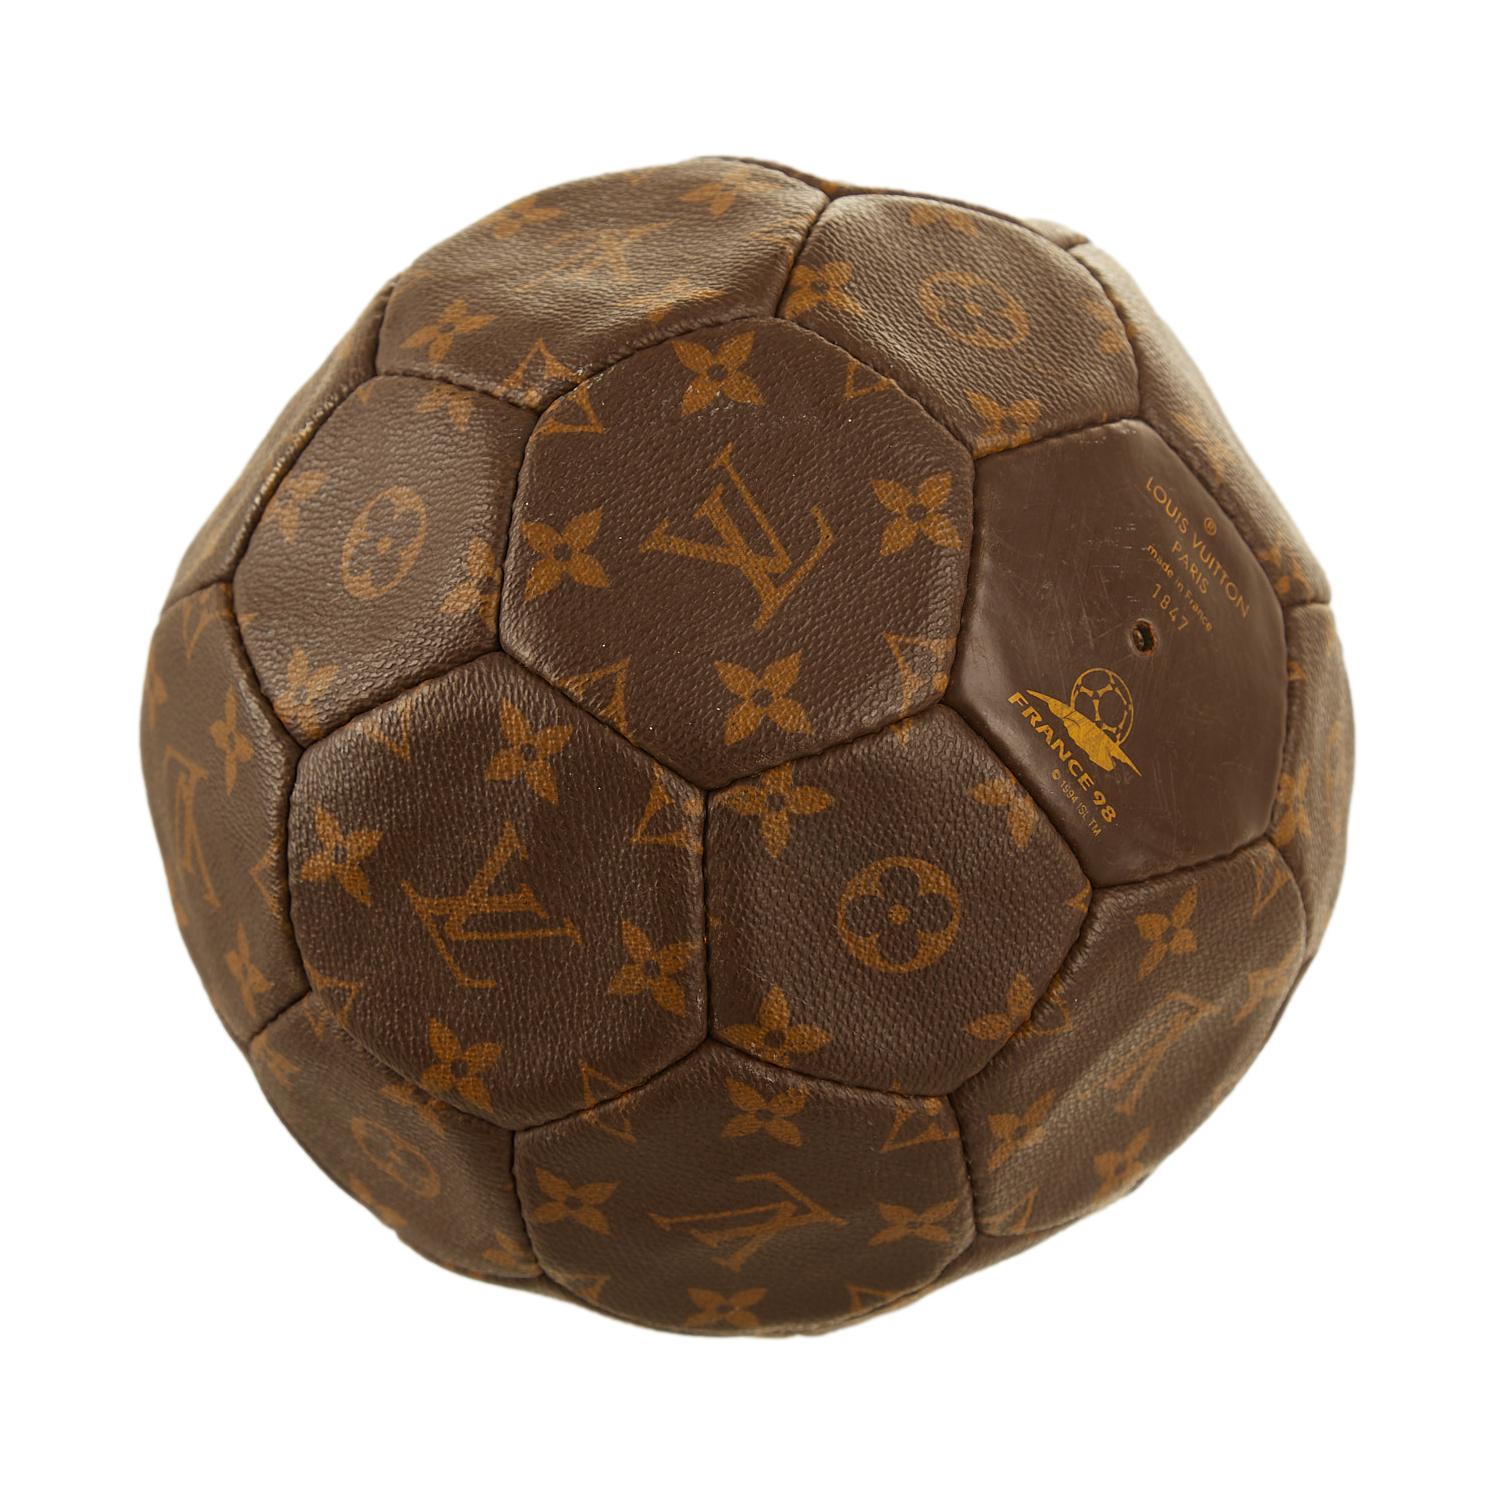 Louis Vuitton Soccer Ball - For Sale on 1stDibs  louis vuitton futbol  topu, ball louis vuitton, soccer ball purse